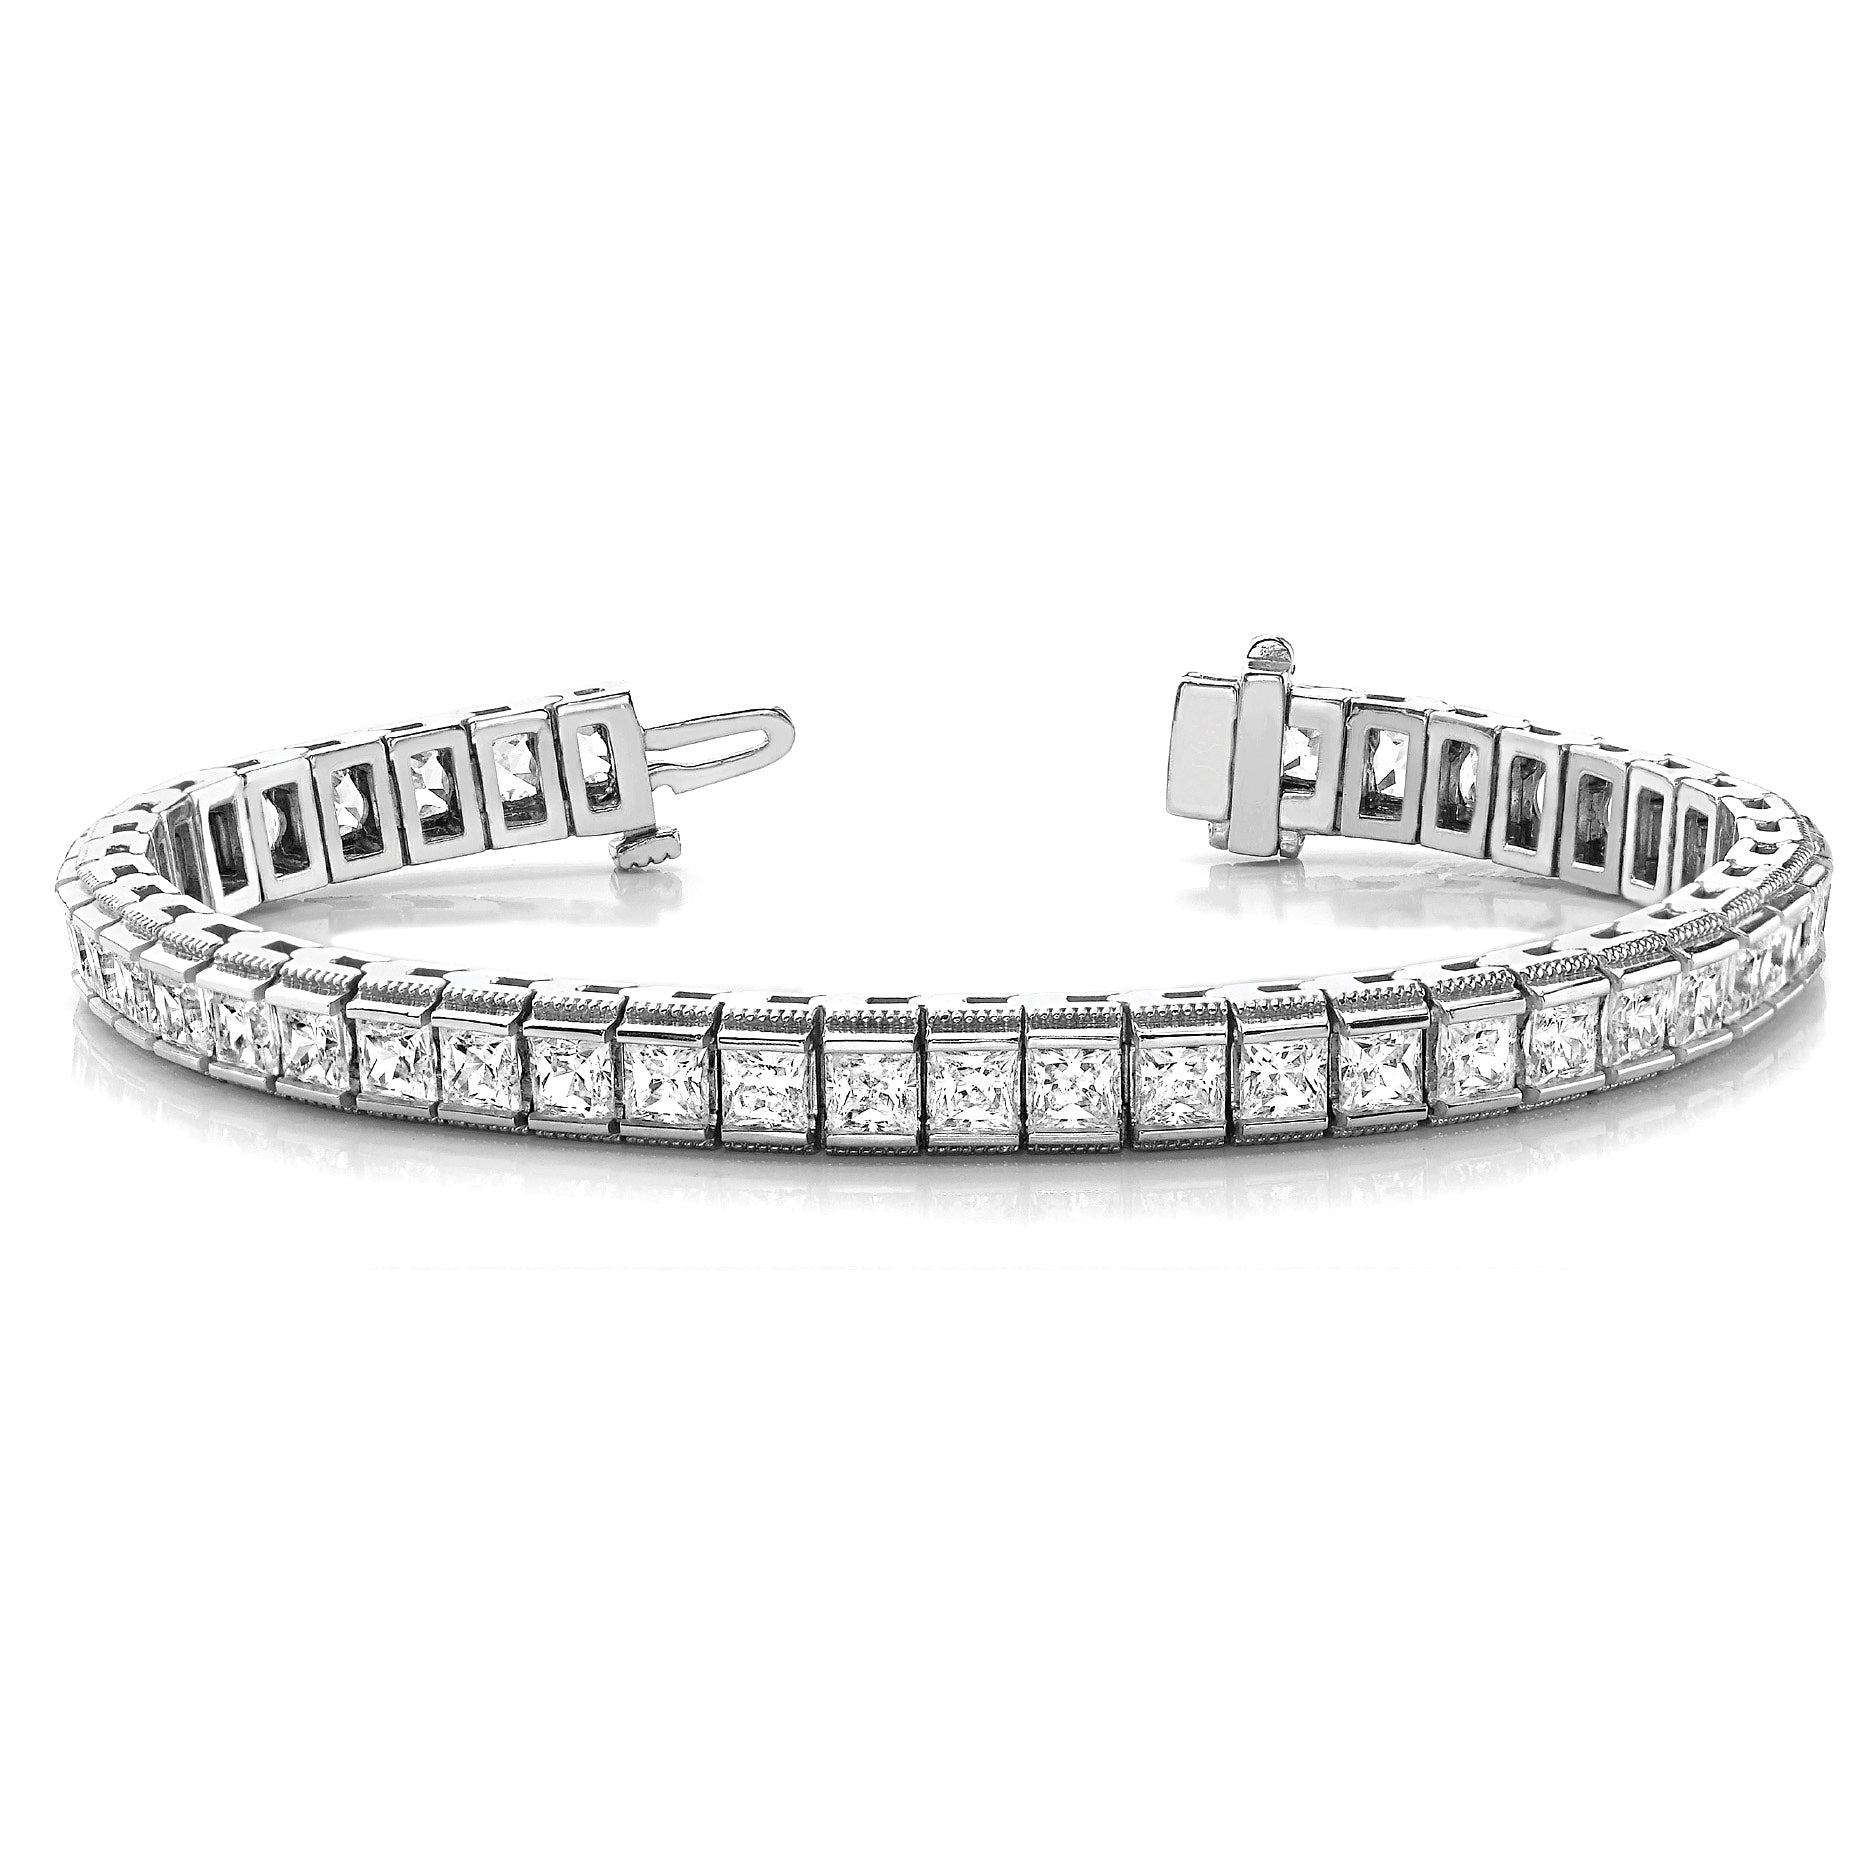 Channel Set 13.0 ctw Princess Cut Diamond Tennis Bracelet Milgrain Edges-in 14K/18K White, Yellow, Rose Gold and Platinum - Christmas Jewelry Gift -VIRABYANI